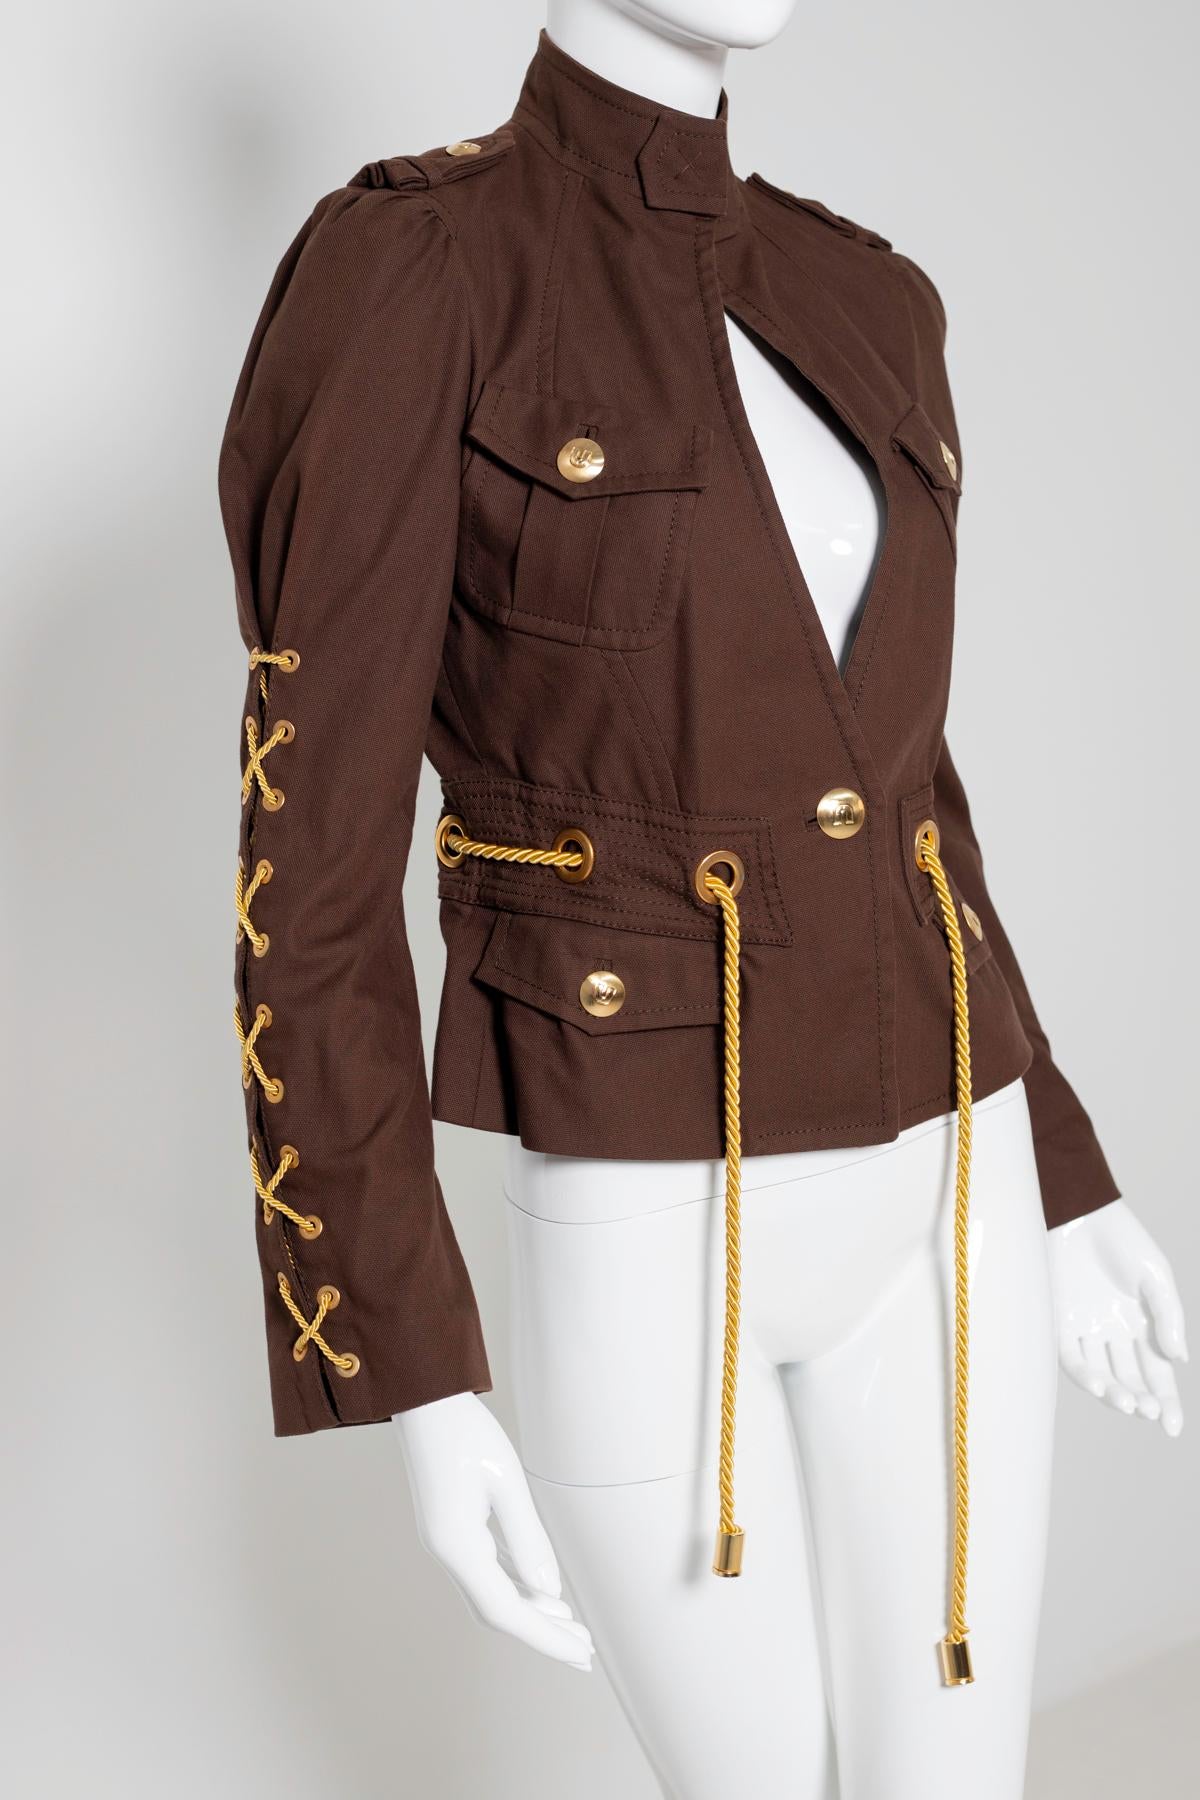 Emanuel Ungaro Vintage Spring Jacket, Original Label In Good Condition For Sale In Milano, IT